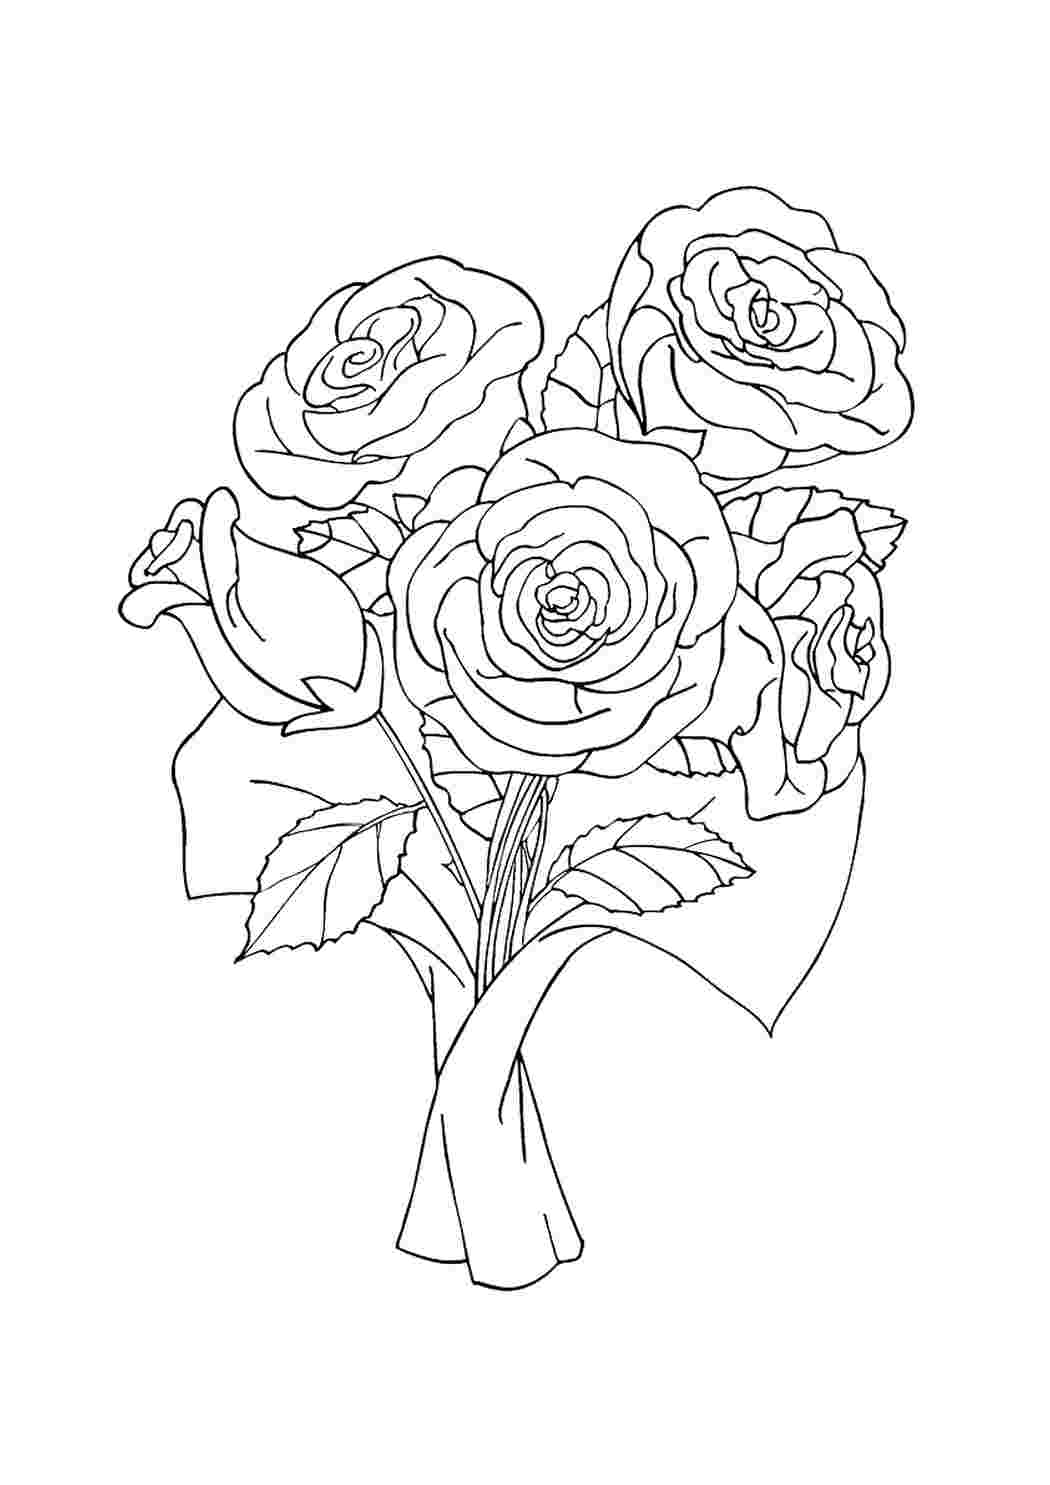 Раскраска Креатто Роспись по холсту Цветы Букет роз